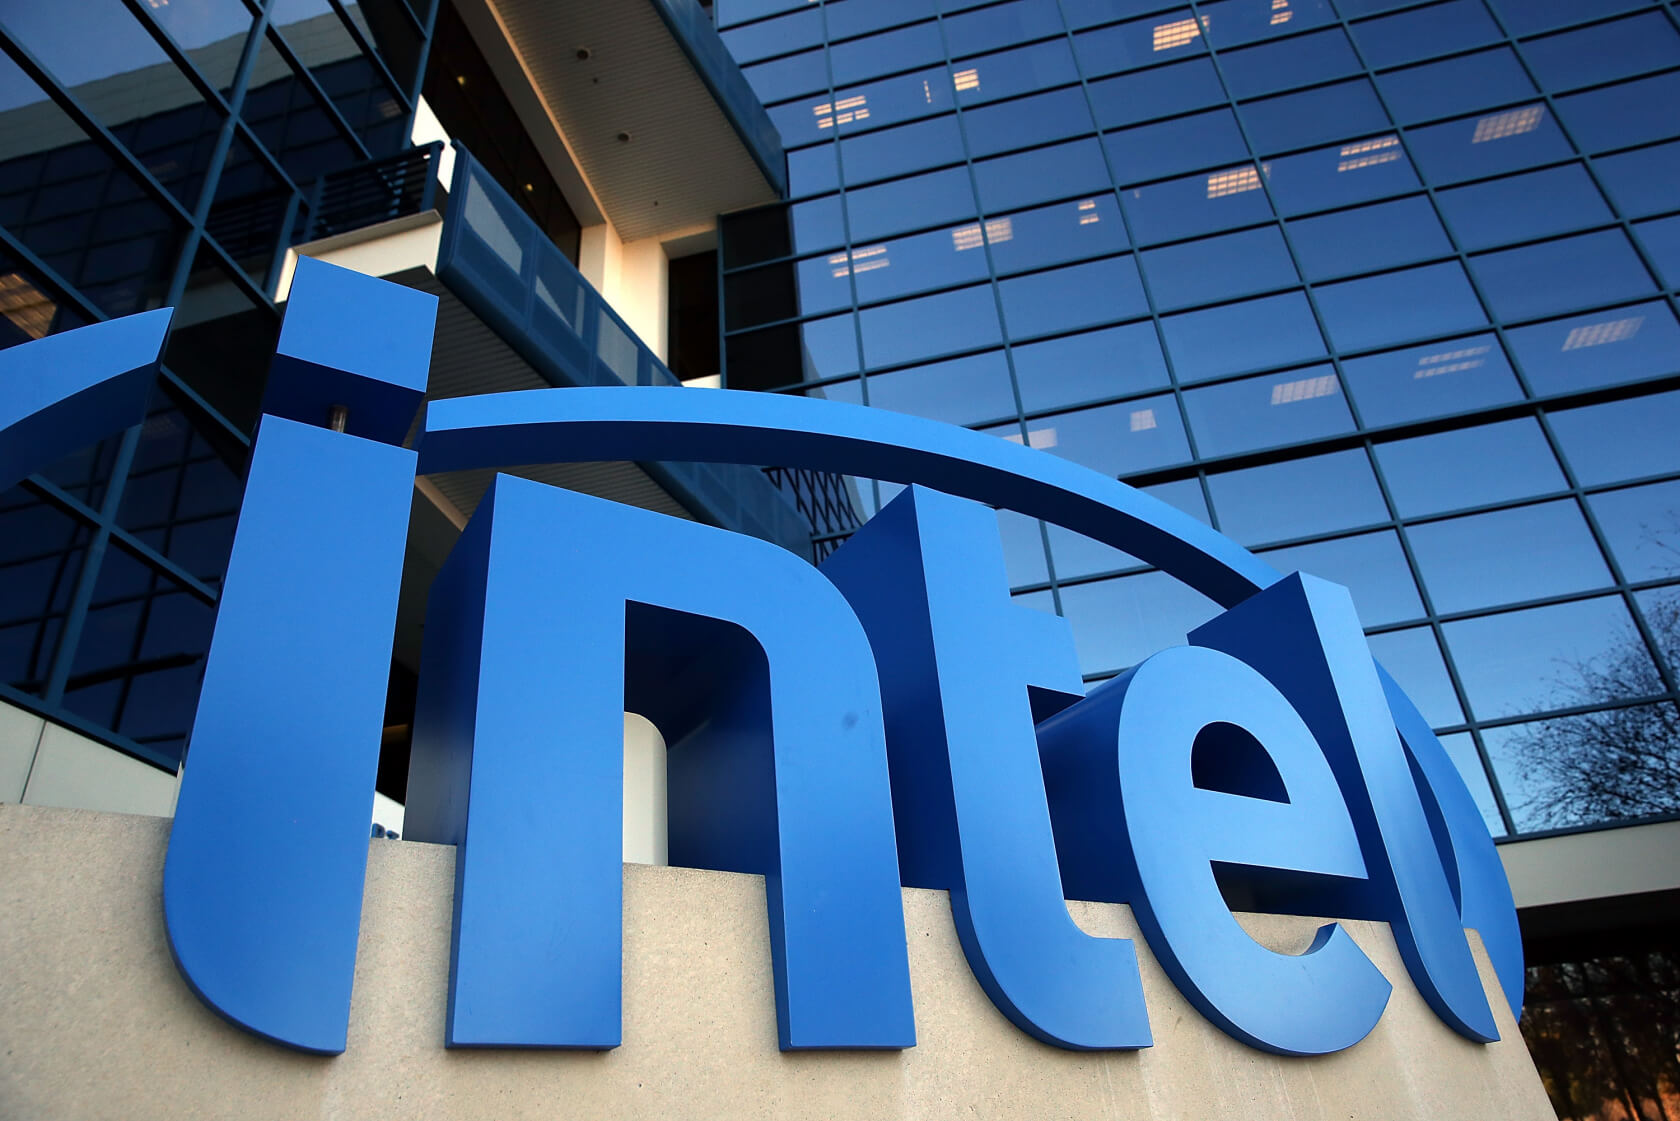 Details emerge for Intel's prototype discrete GPUs